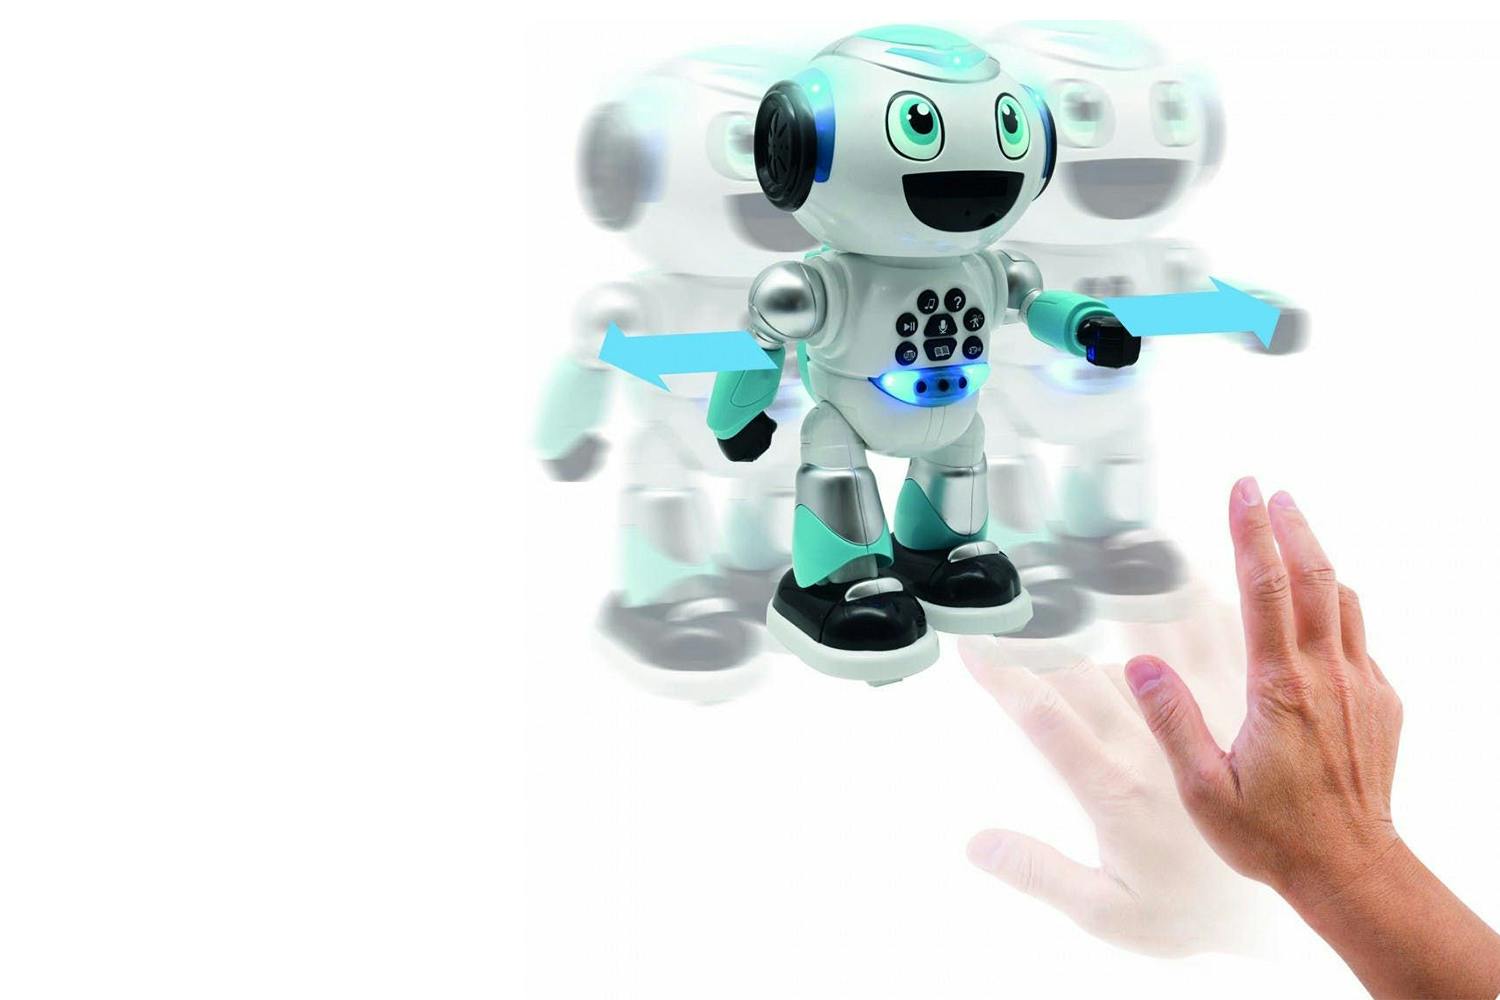 Lexibook PowerMan Max Educational & Programmable Toy Robot READ